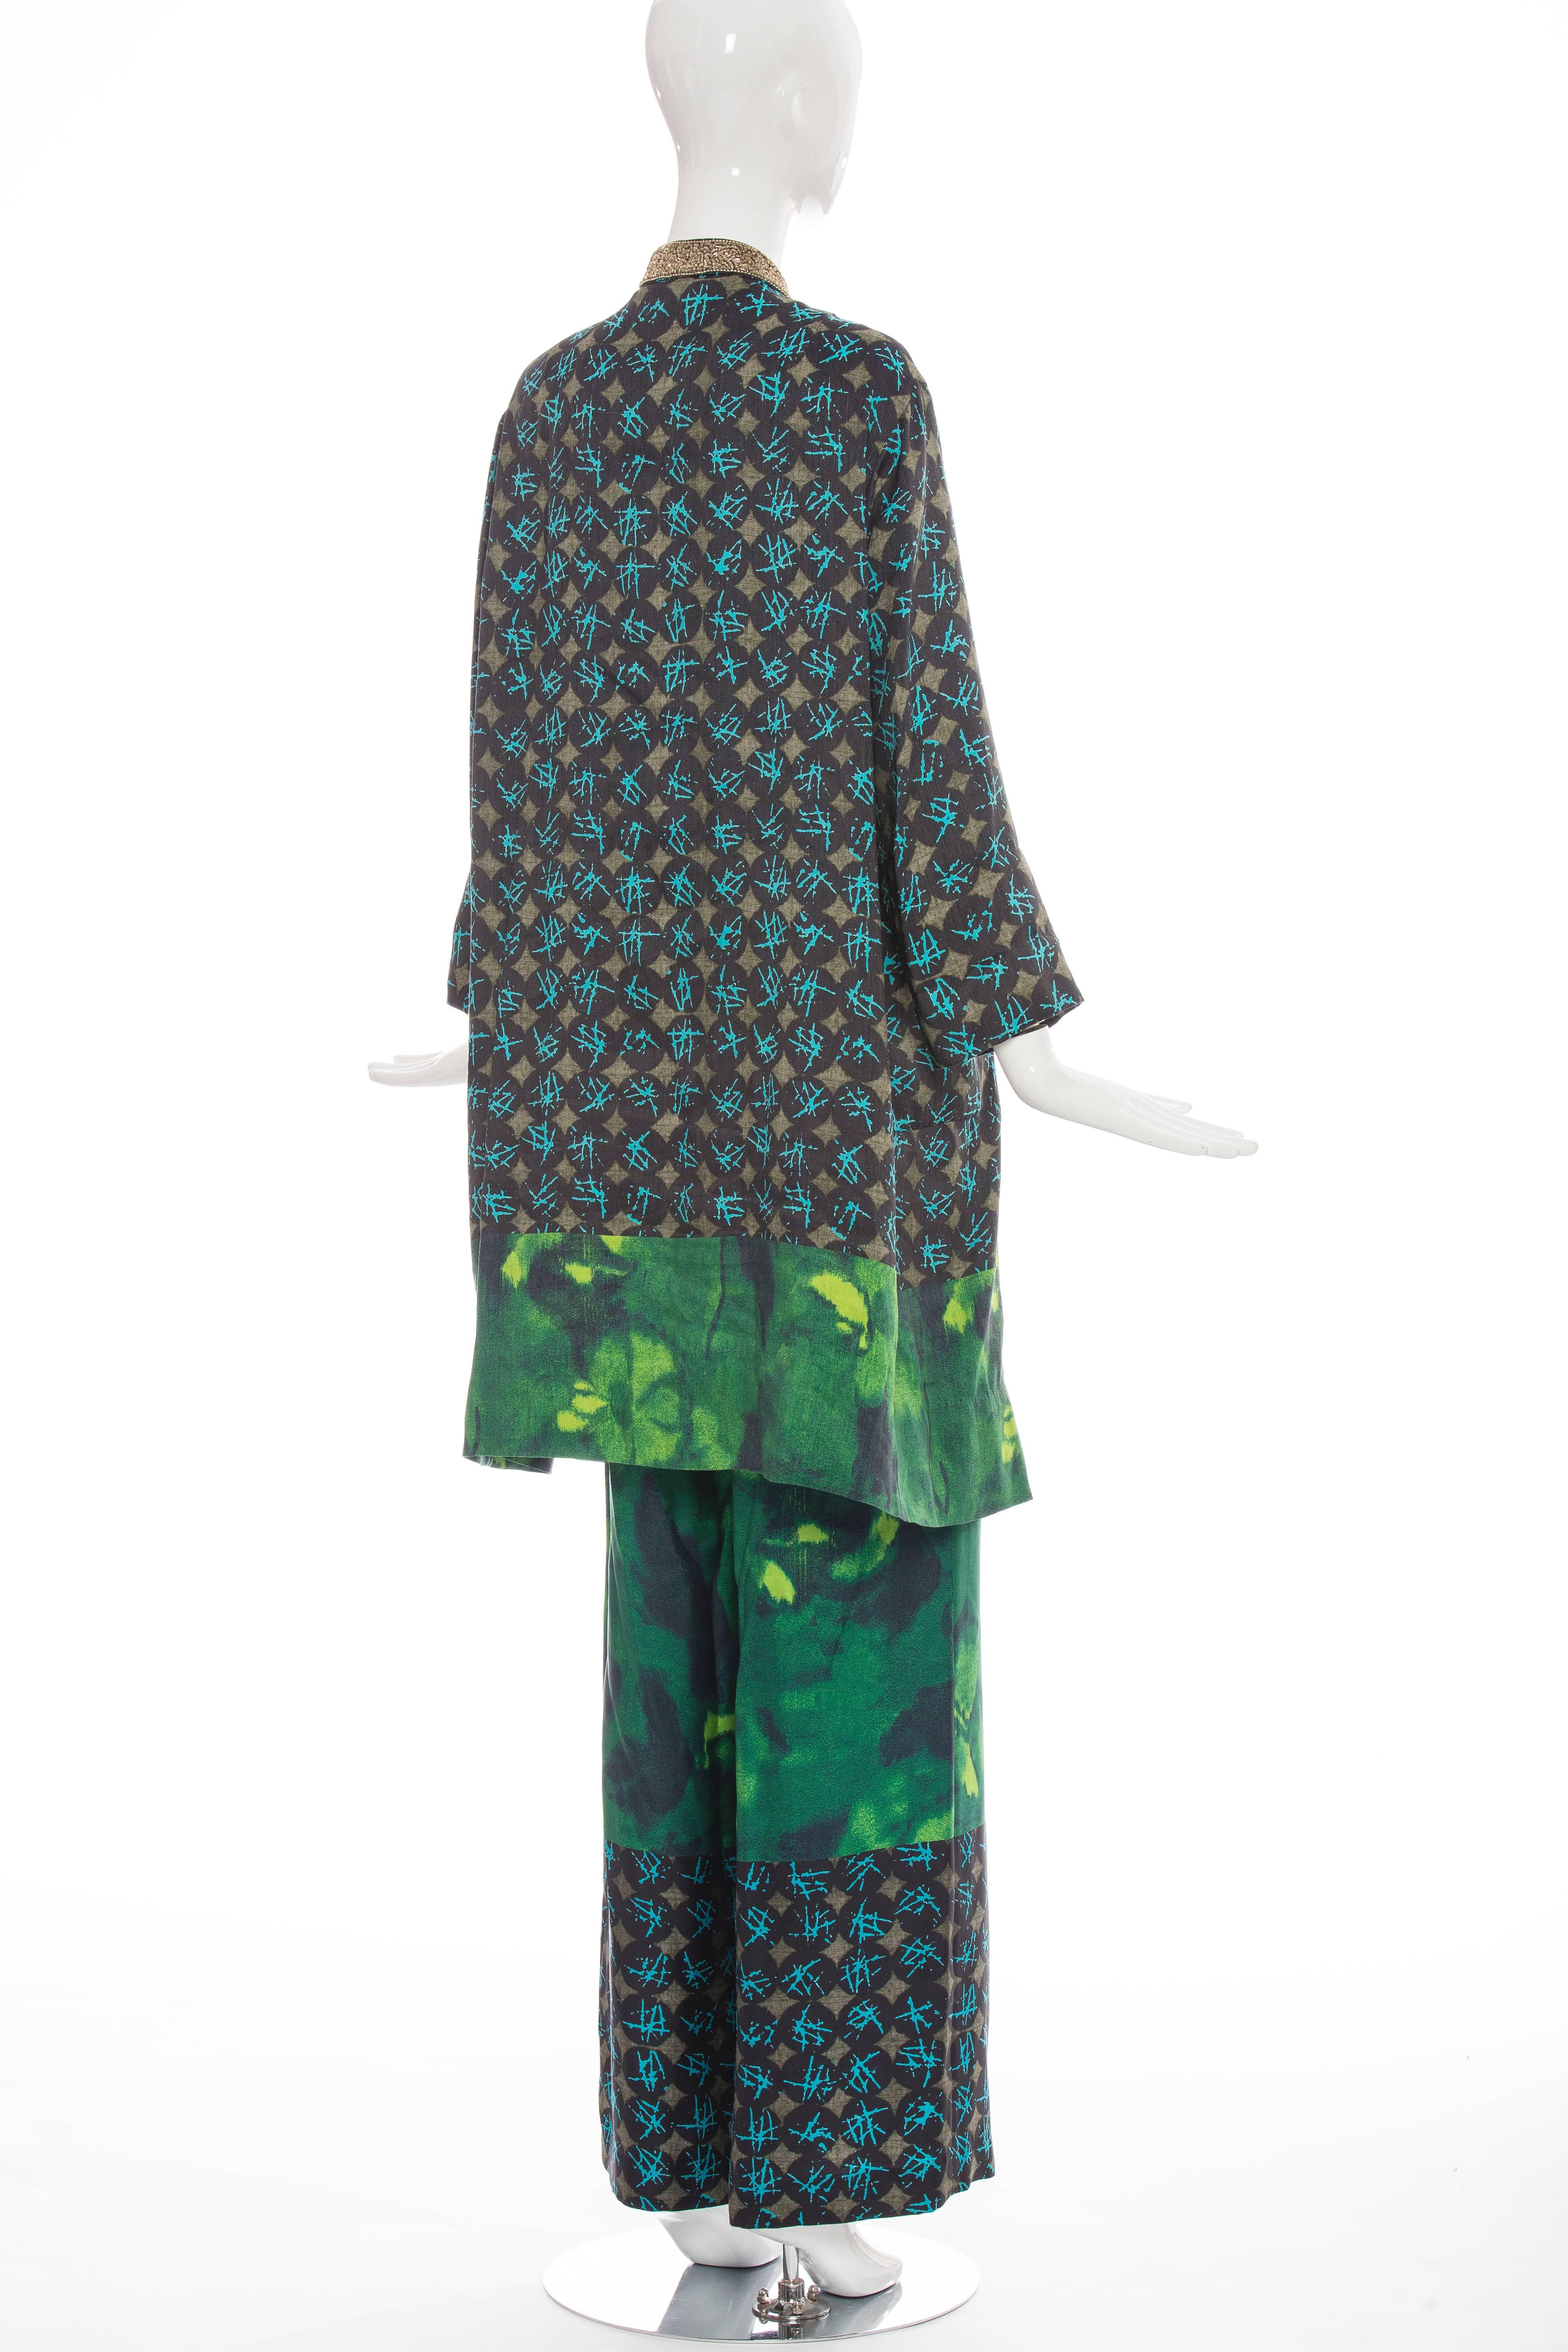 Dries Van Noten Printed Linen Silk Bead & Cabachons Pant Suit, Spring 2008 2